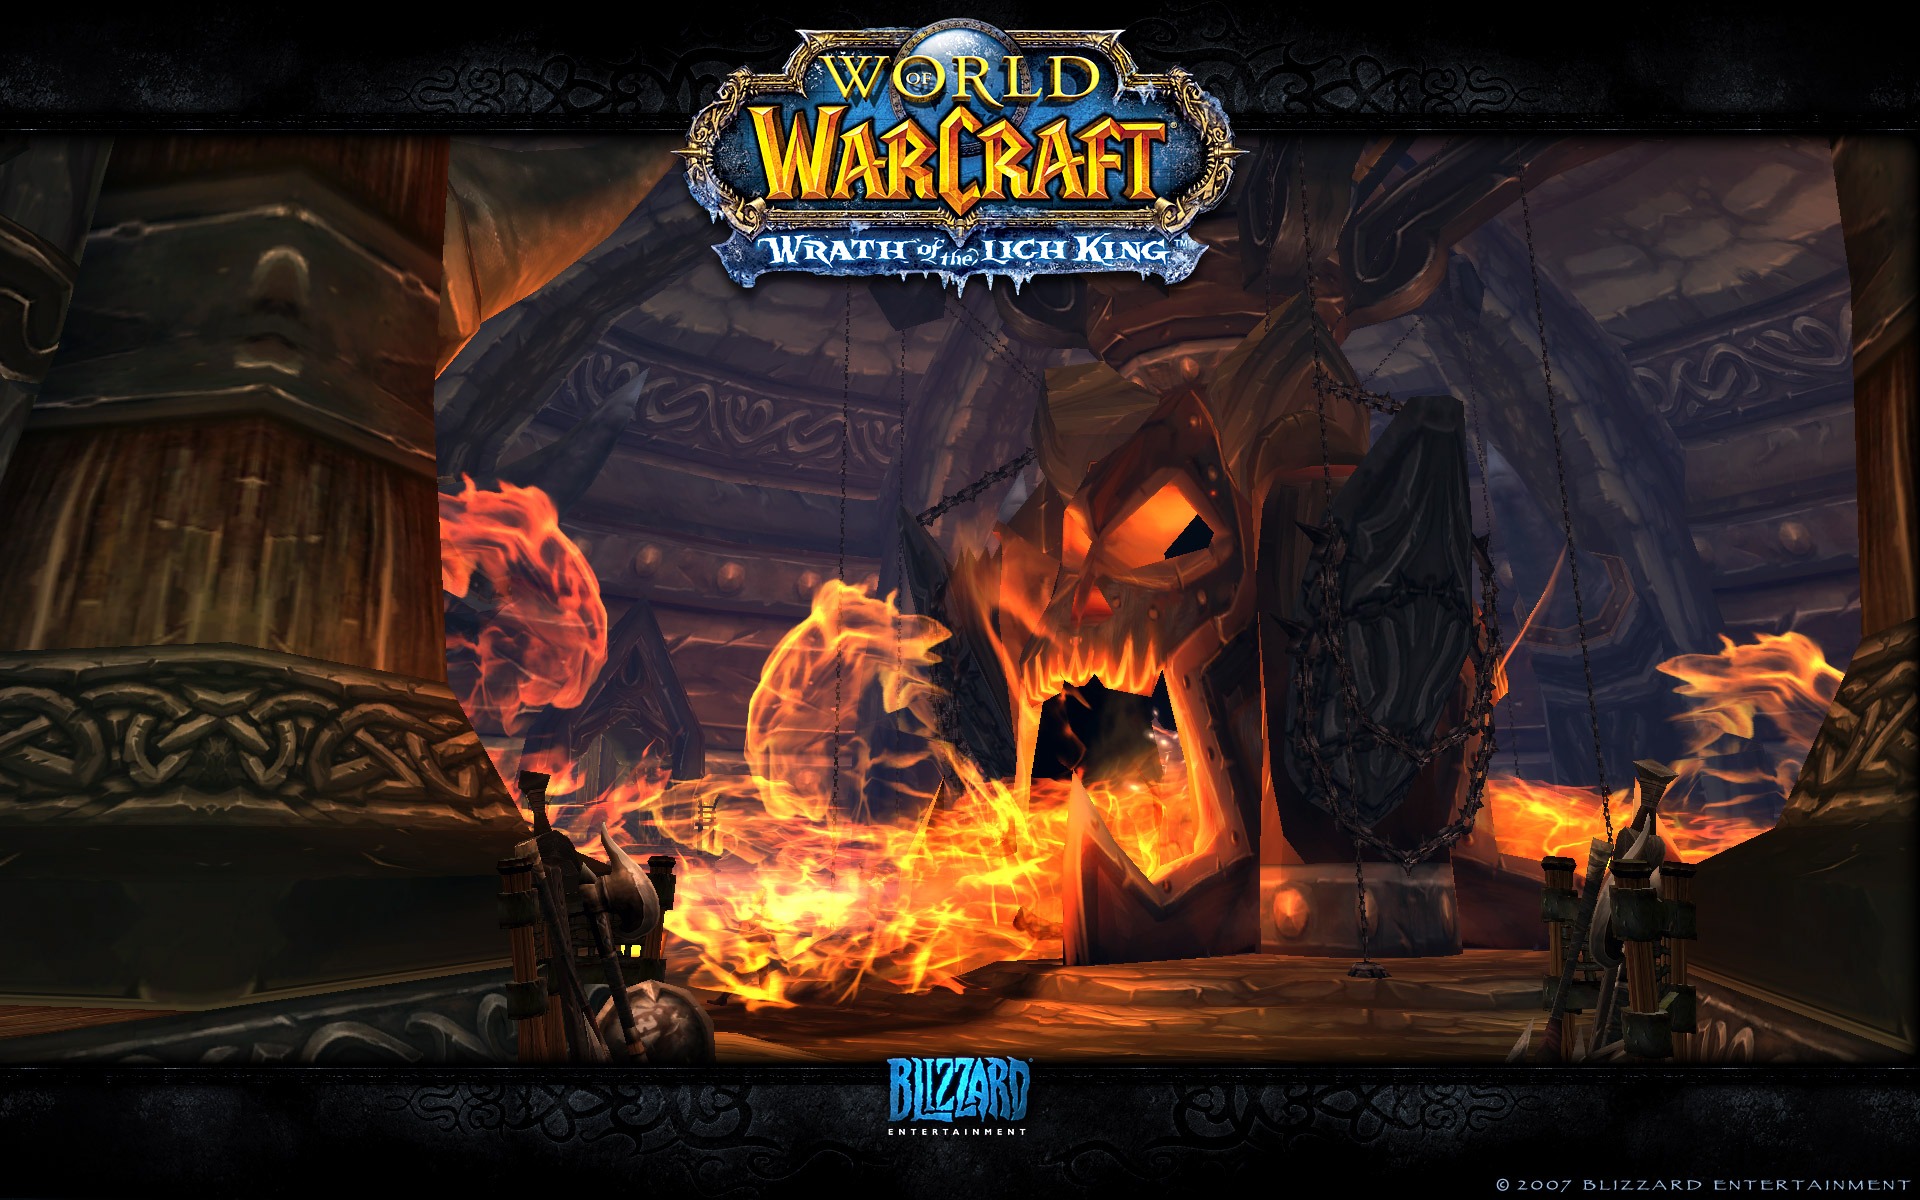 World of Warcraft 魔兽世界高清壁纸(二)5 - 1920x1200